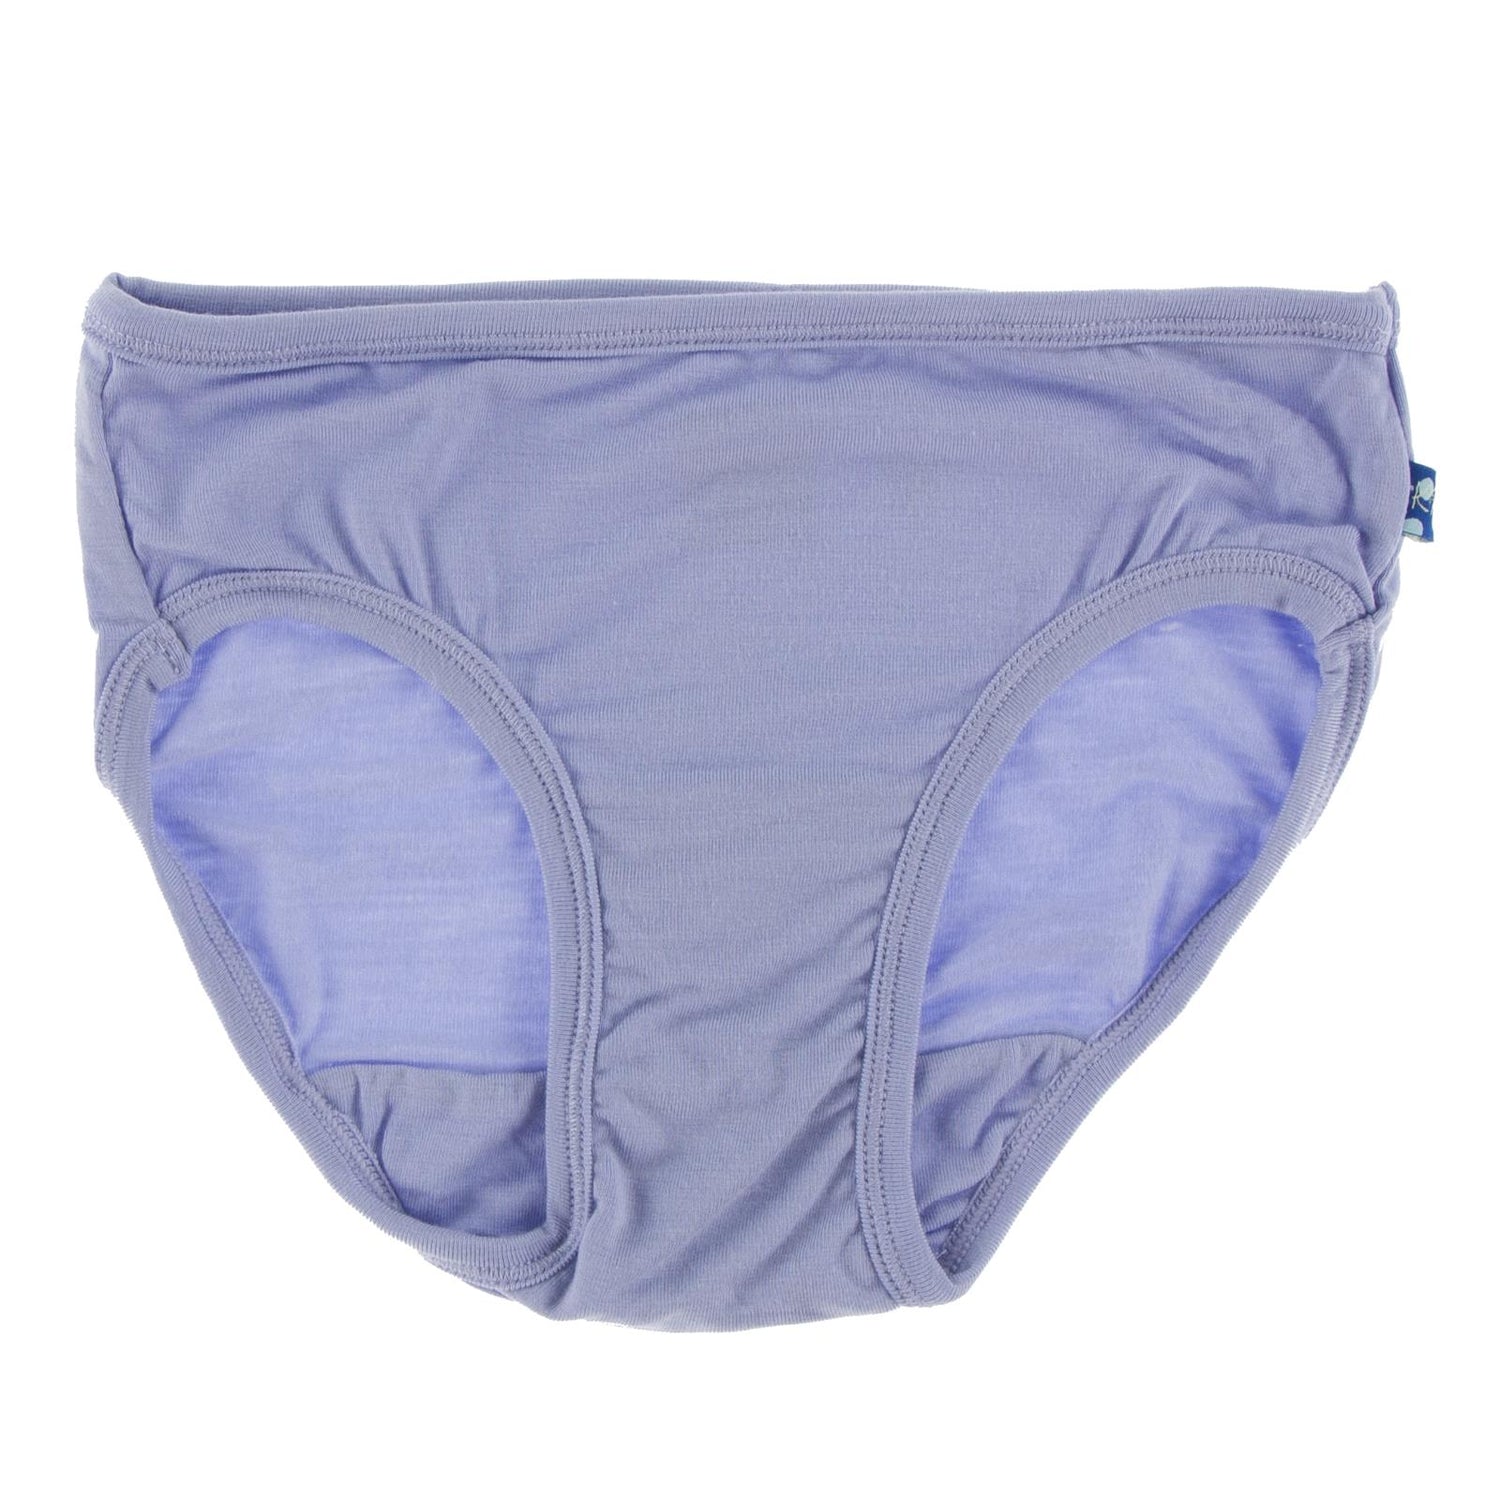 Underwear in Lilac